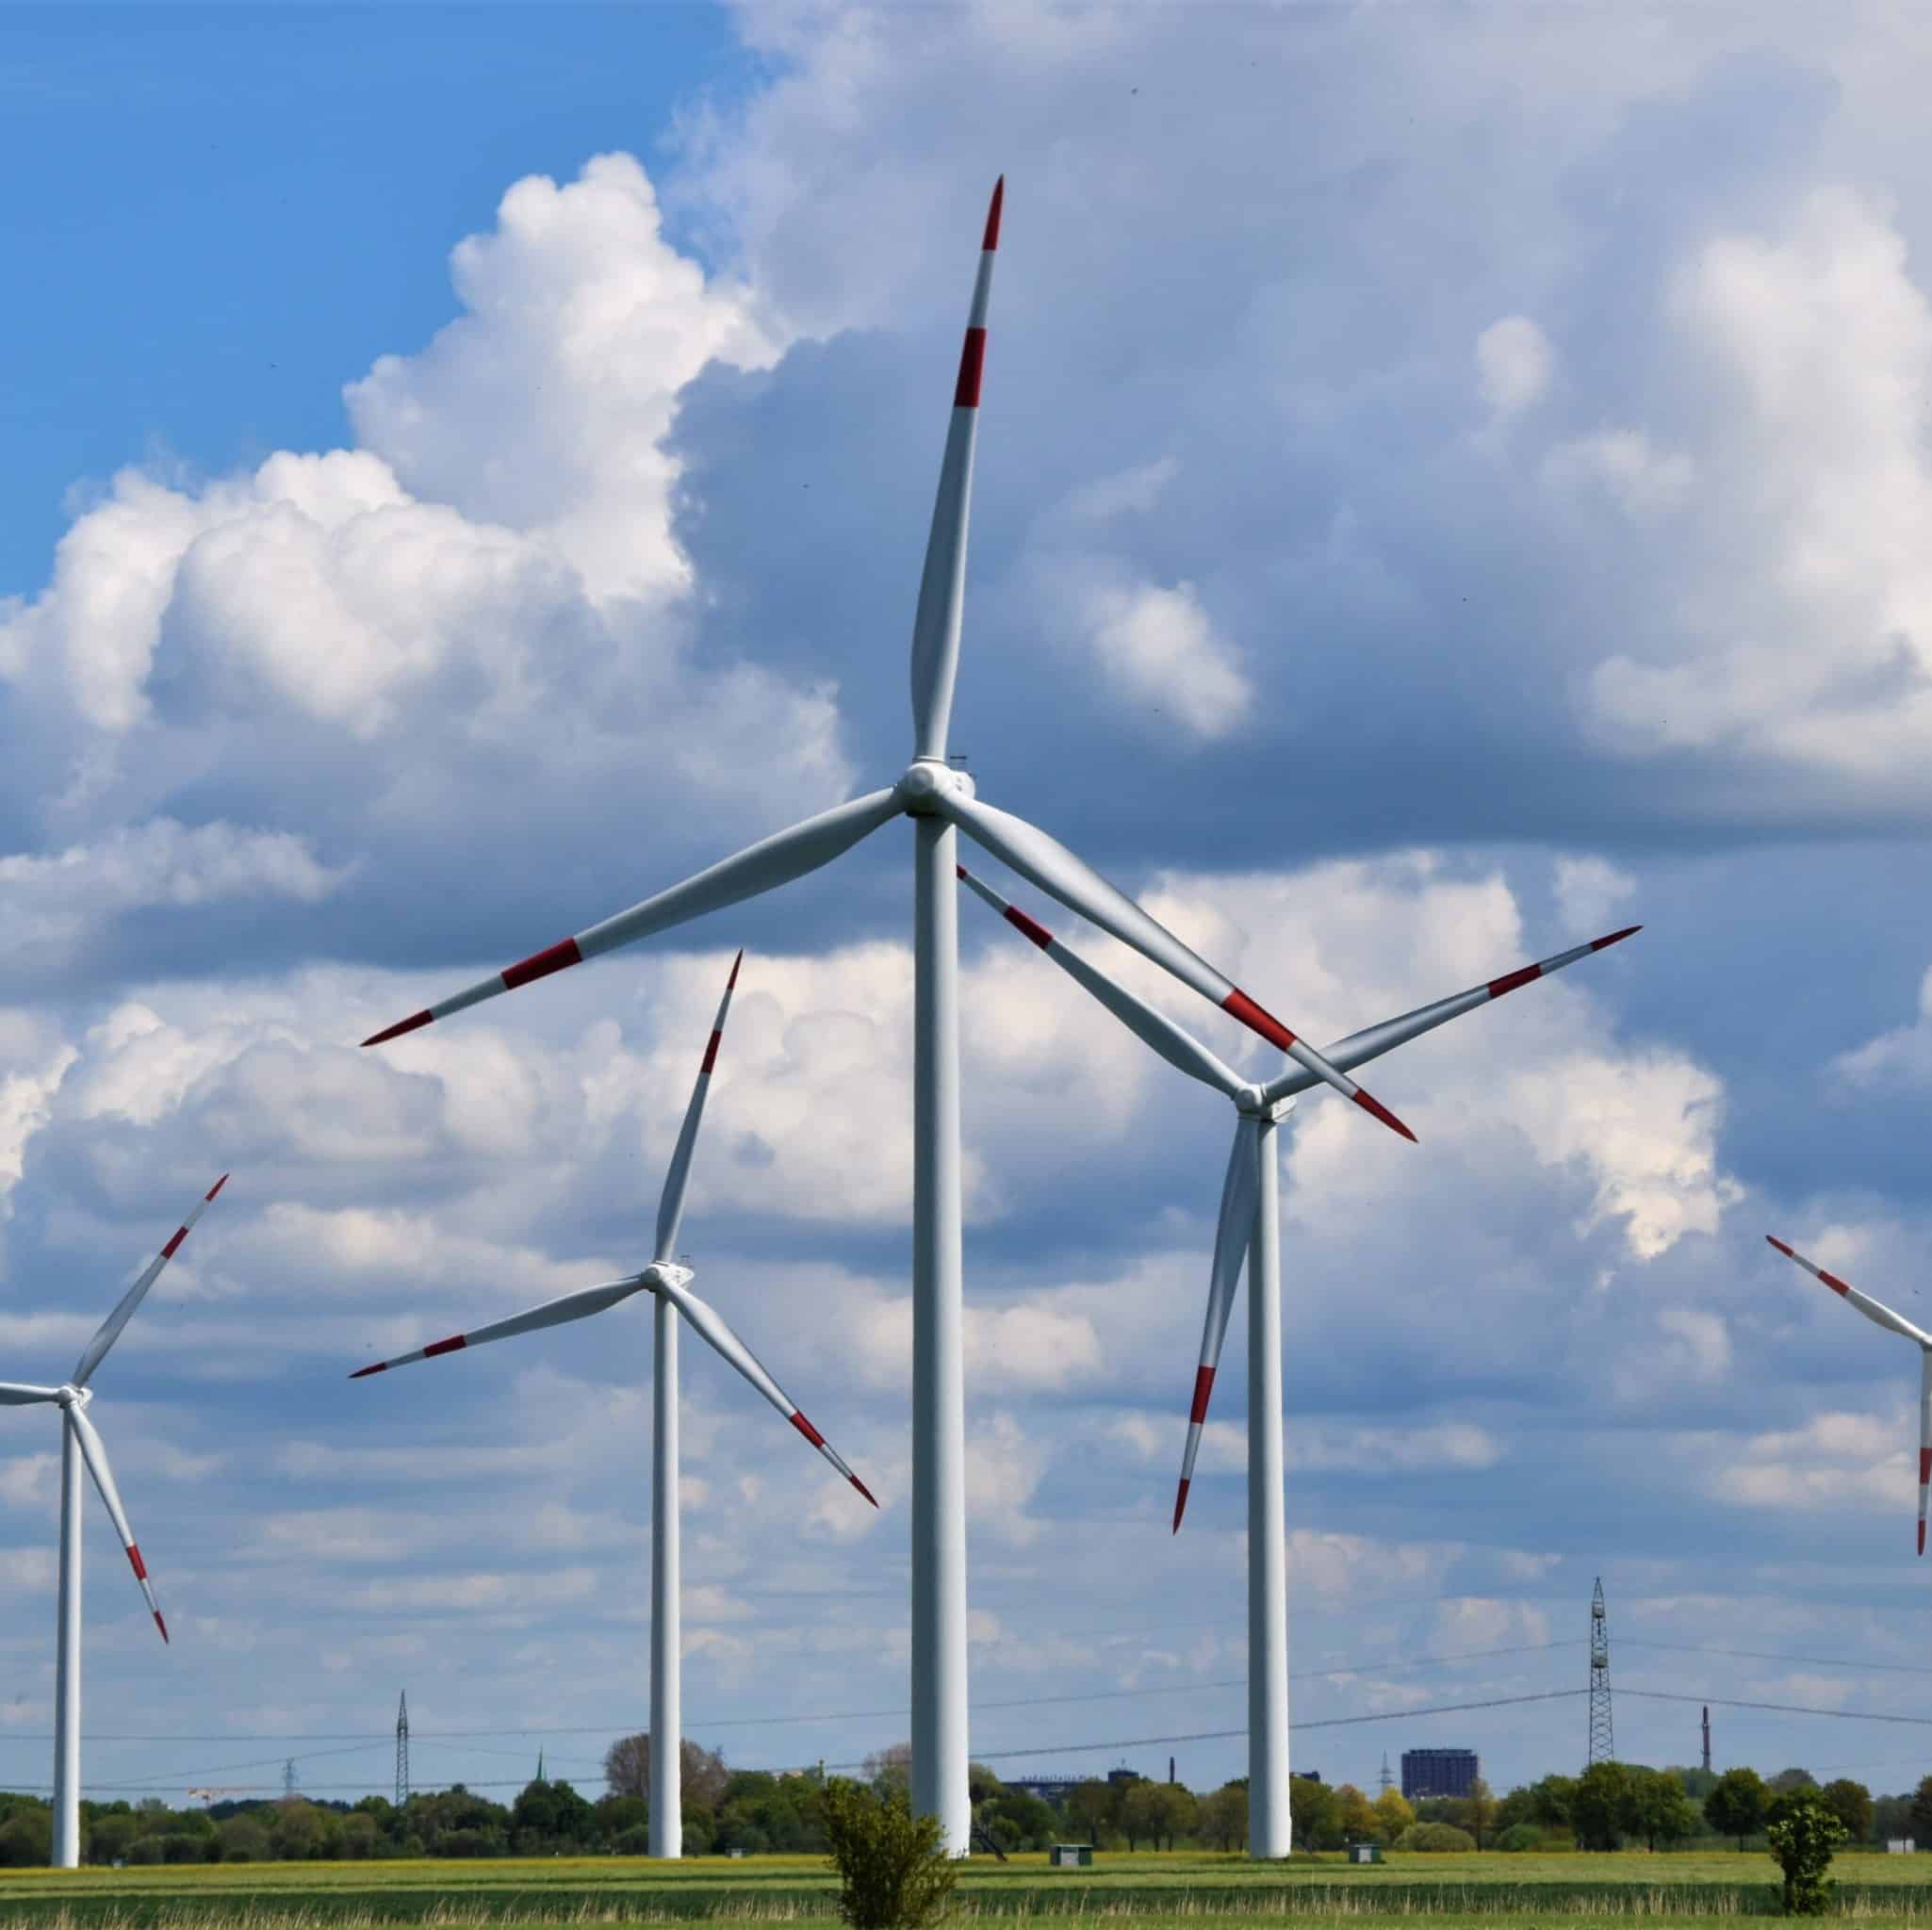 An image of wind turbines.